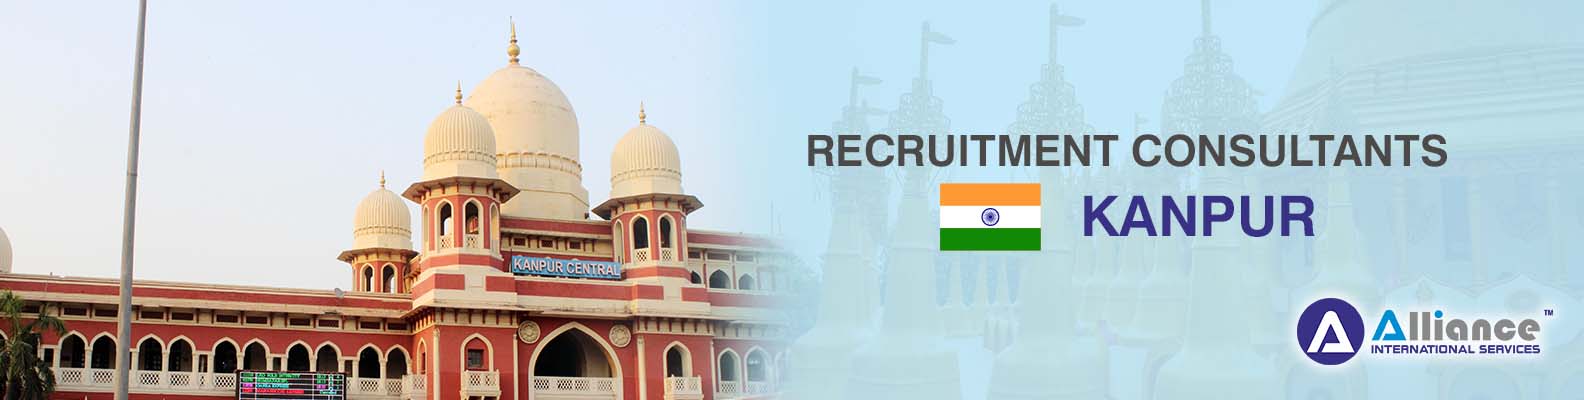 Recruitment Consultants Kanpur